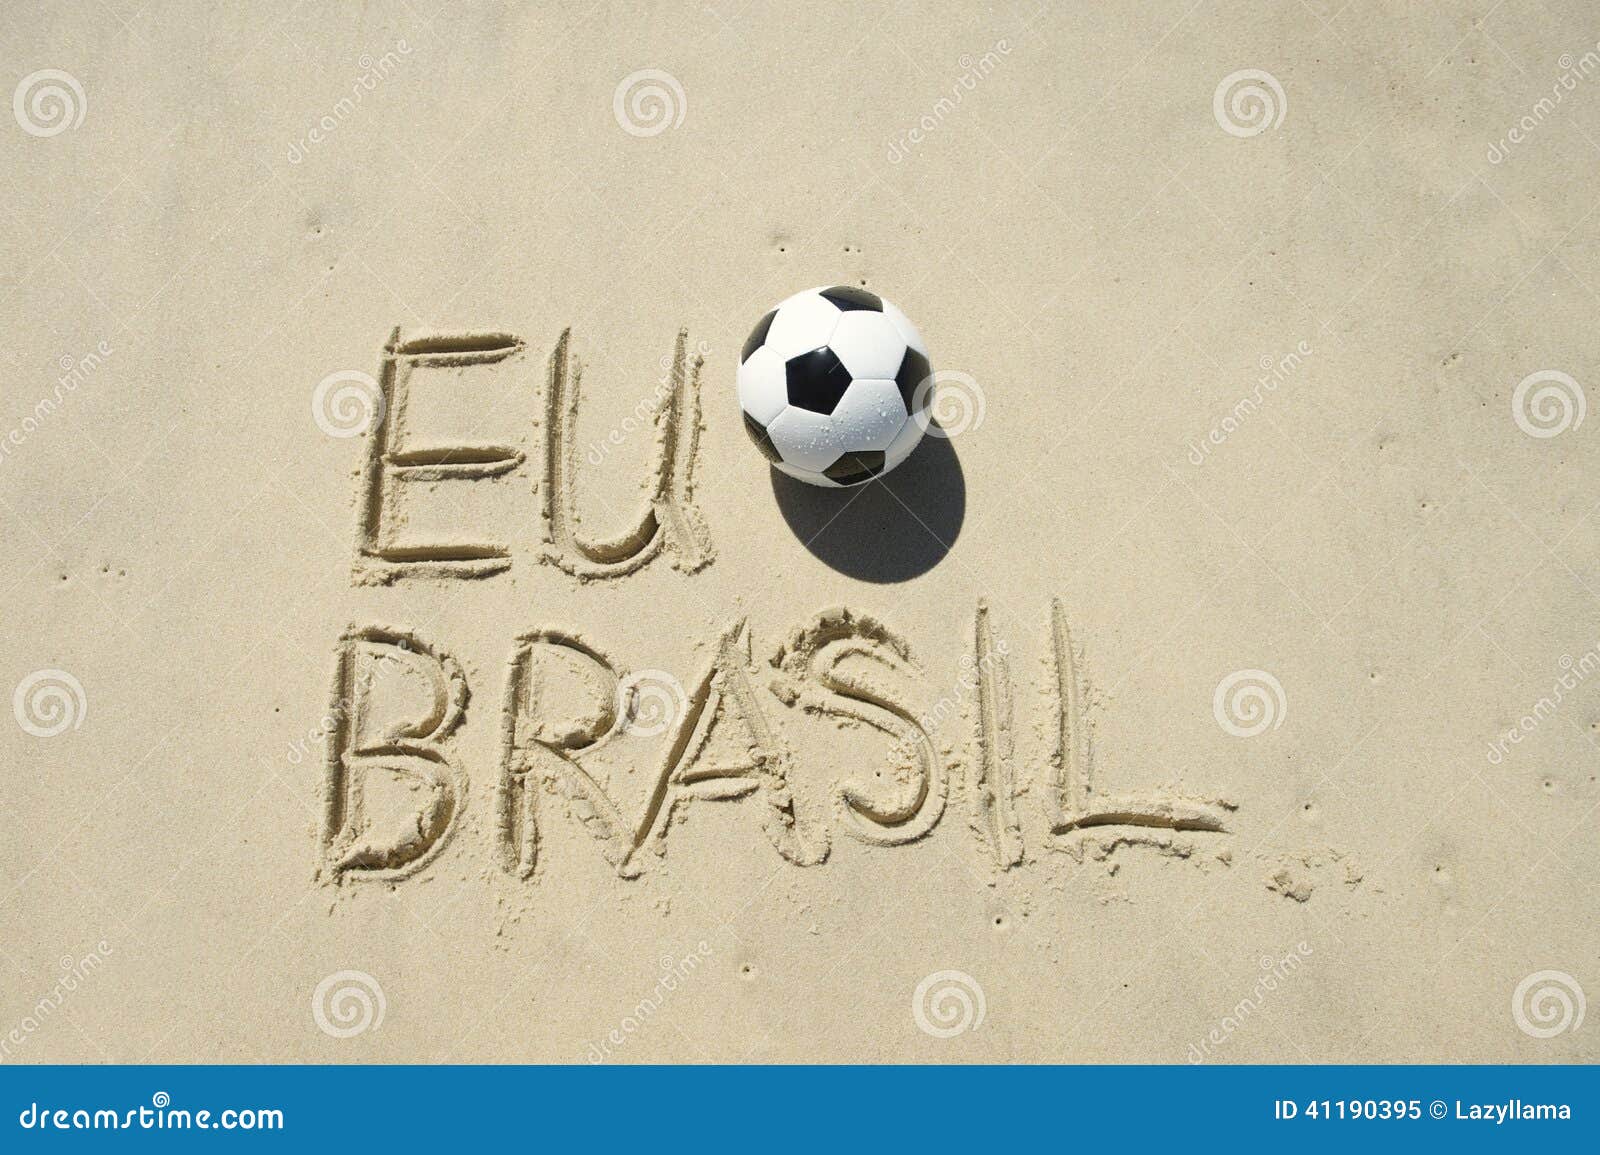 i football brazil sand message